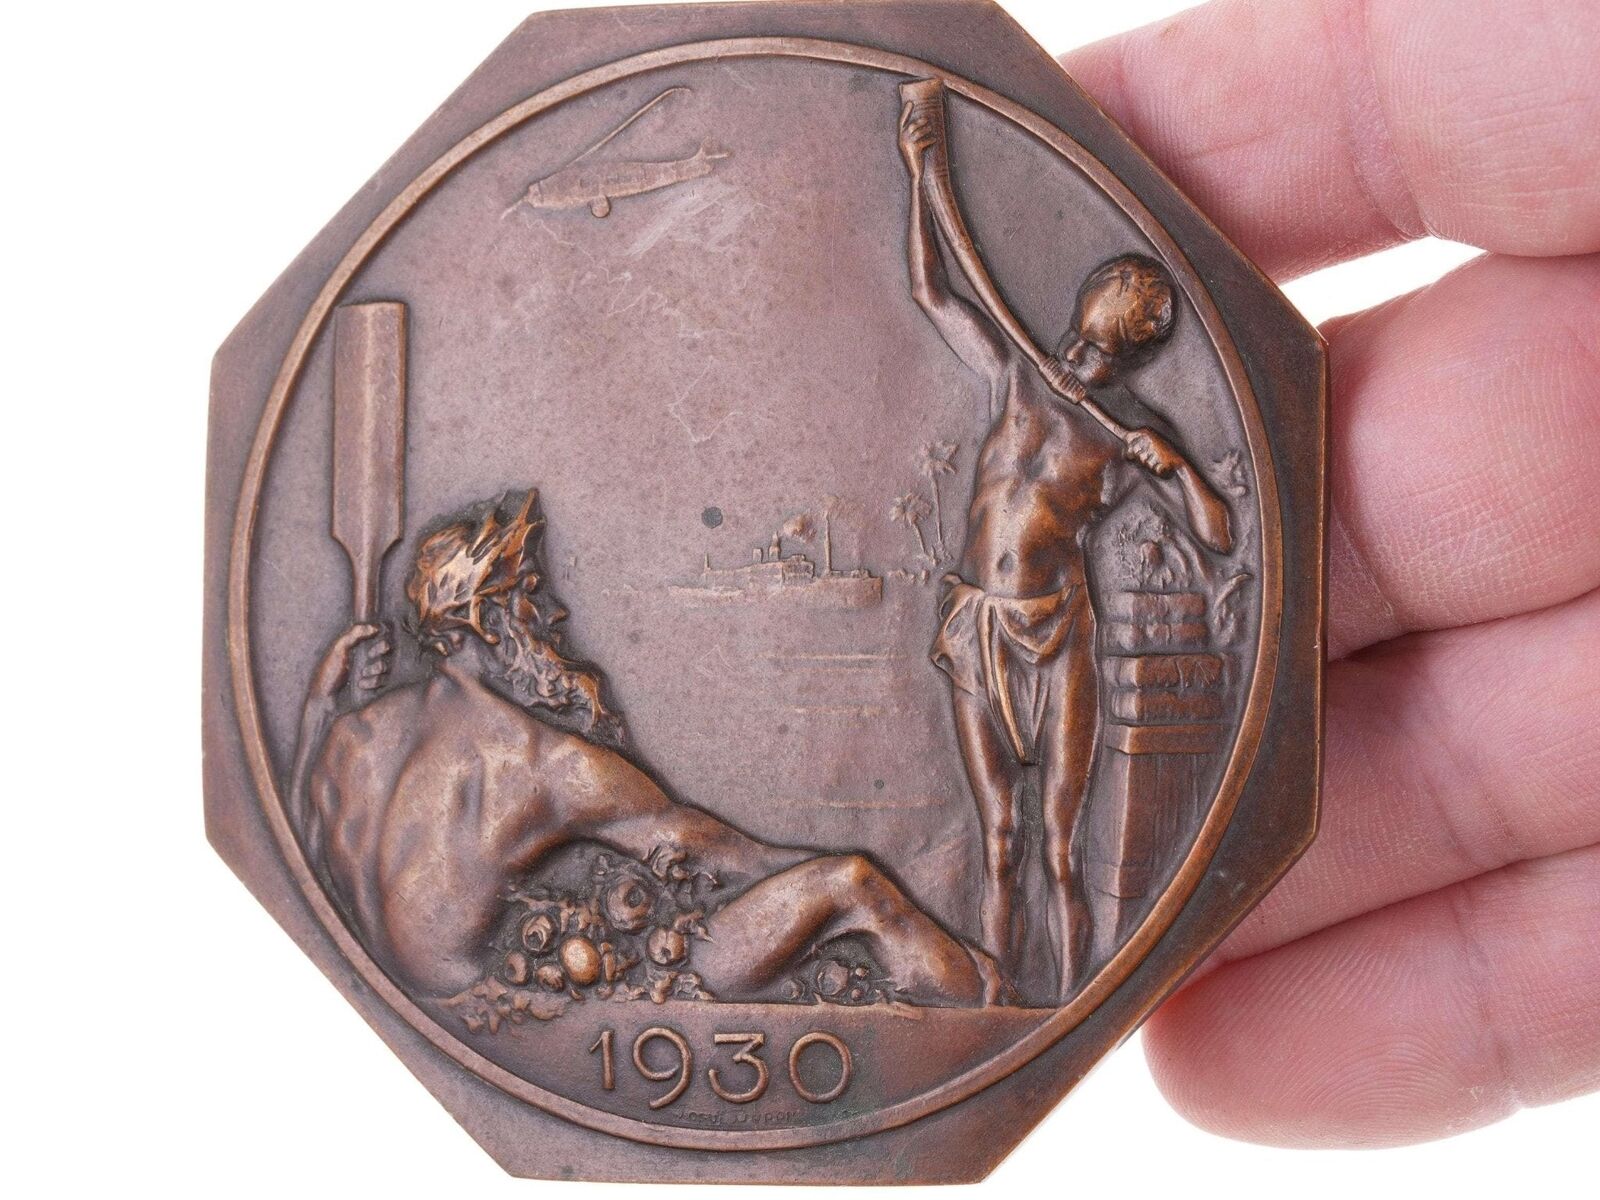 Josuë Dupon (Belgian, 1864-1935) Art deco universal exposition Anvers 1930 medal